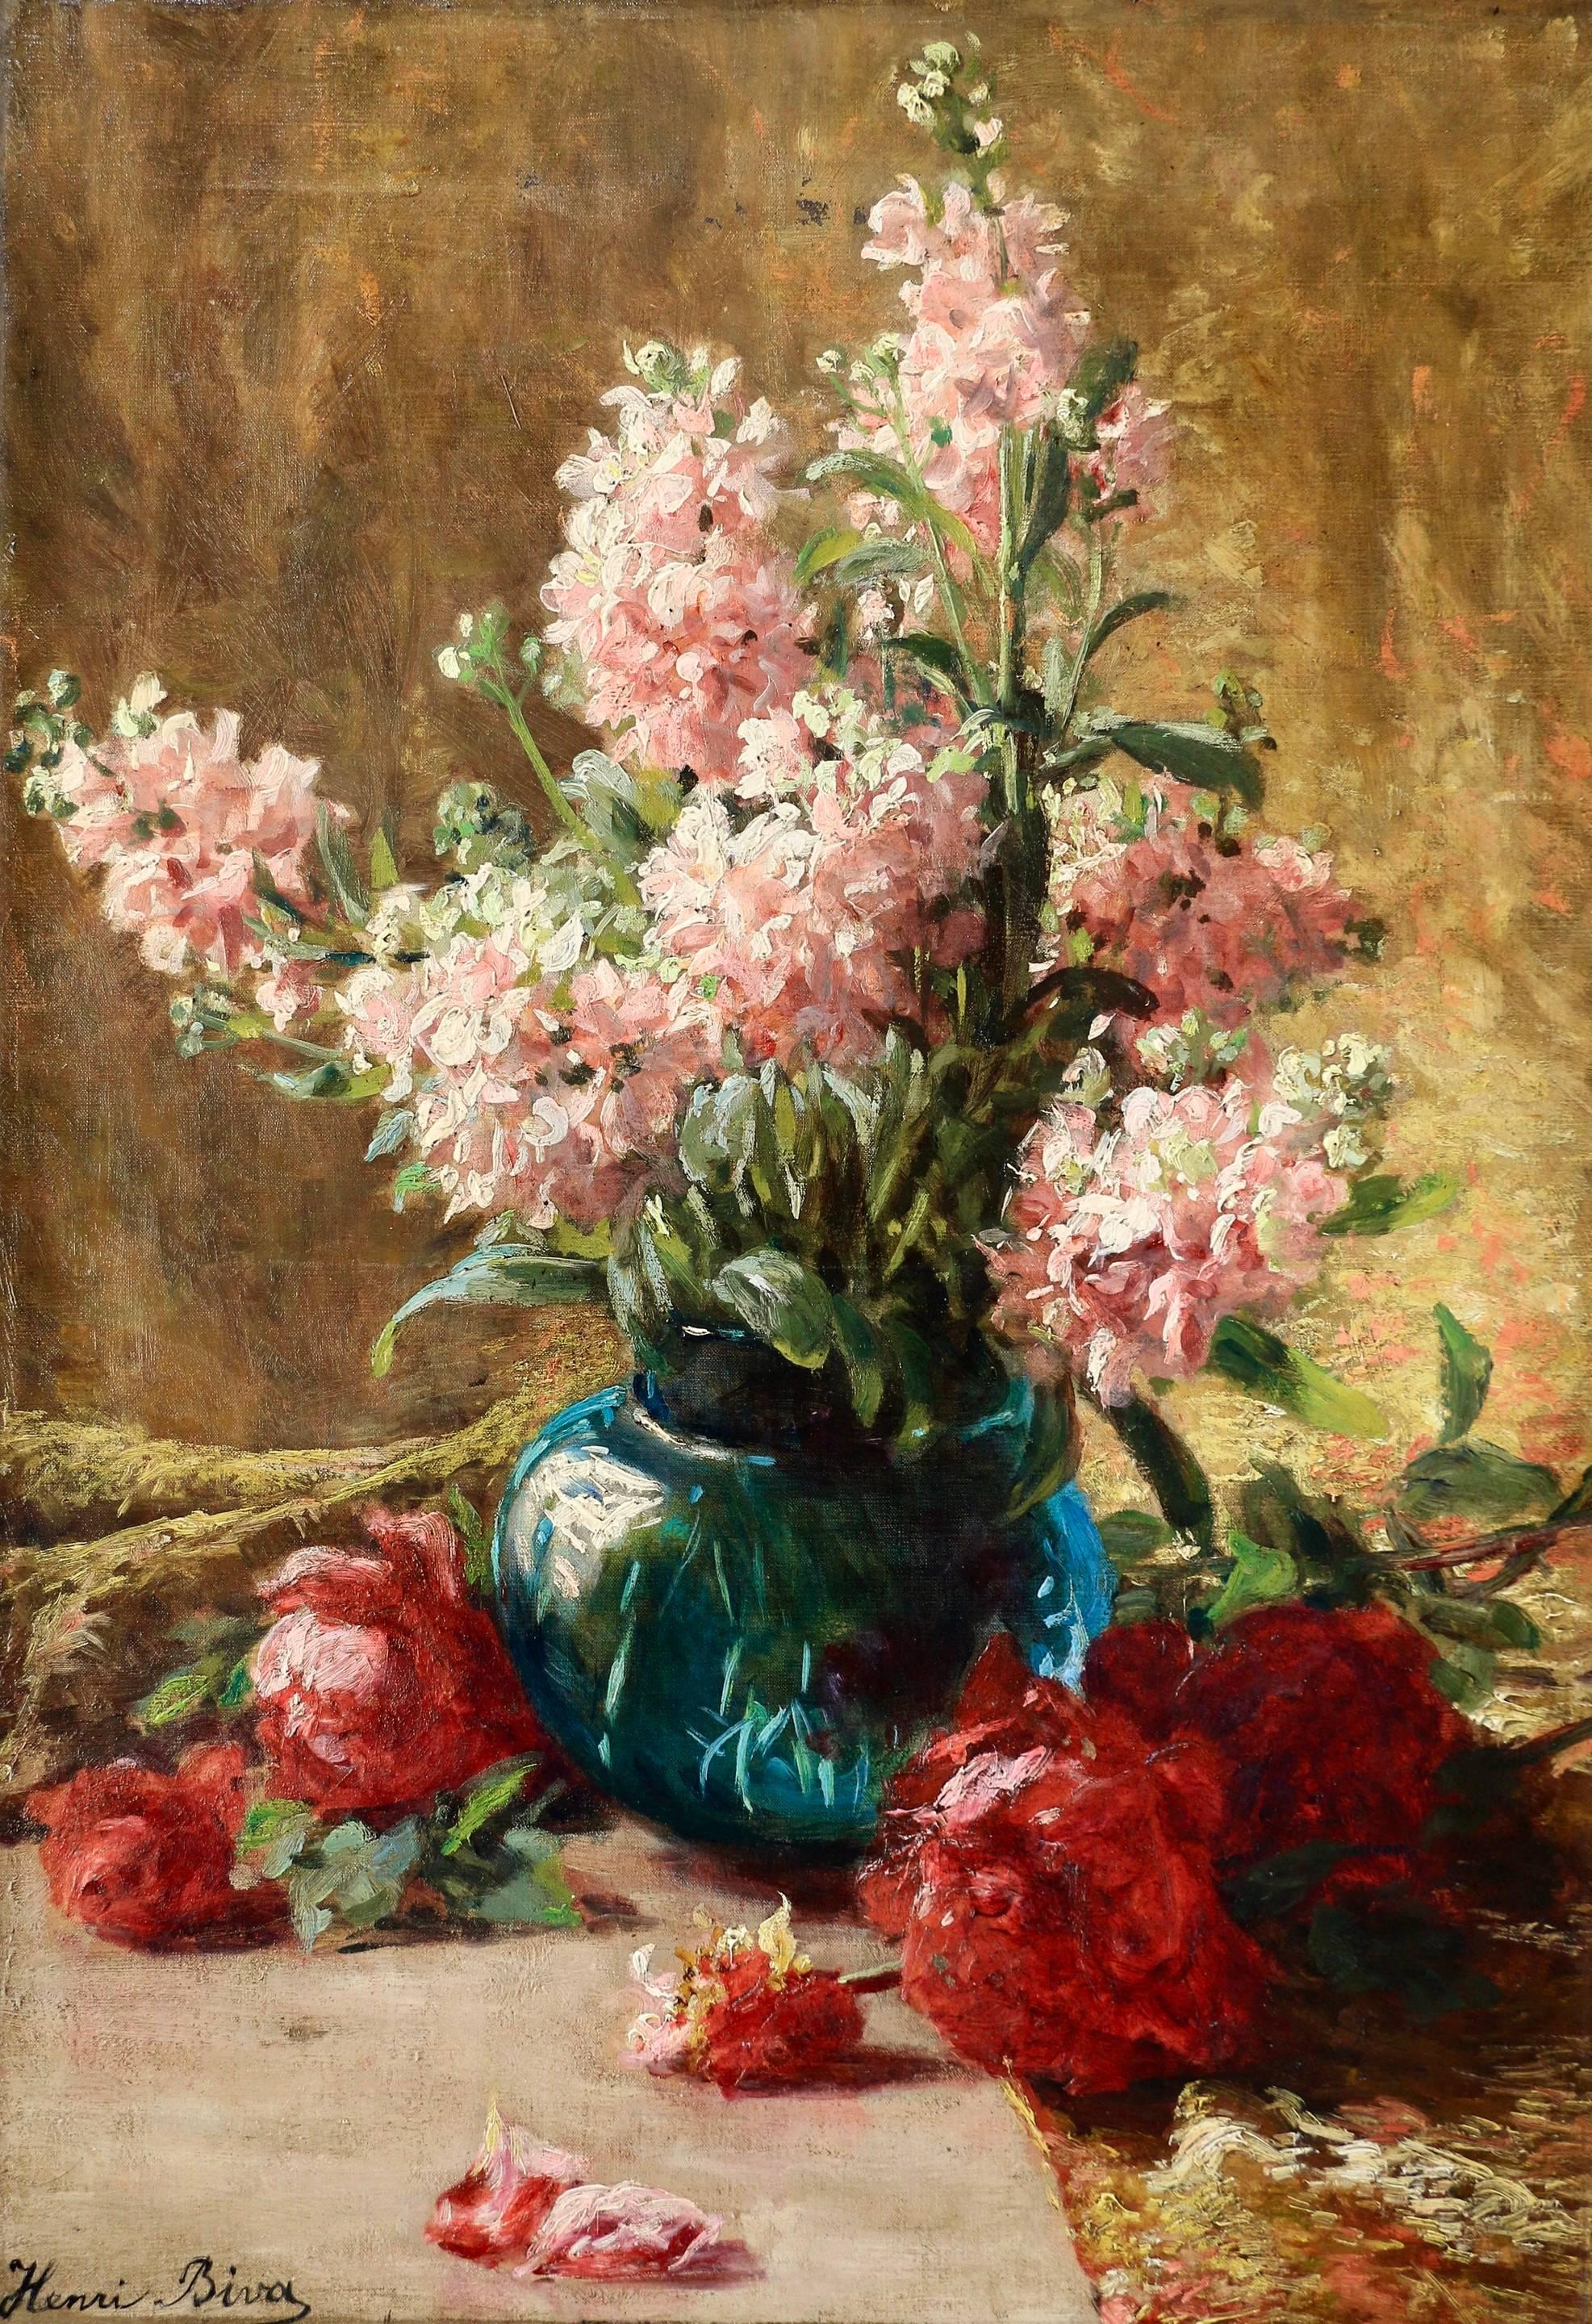 Henri Biva Interior Painting - Flowers